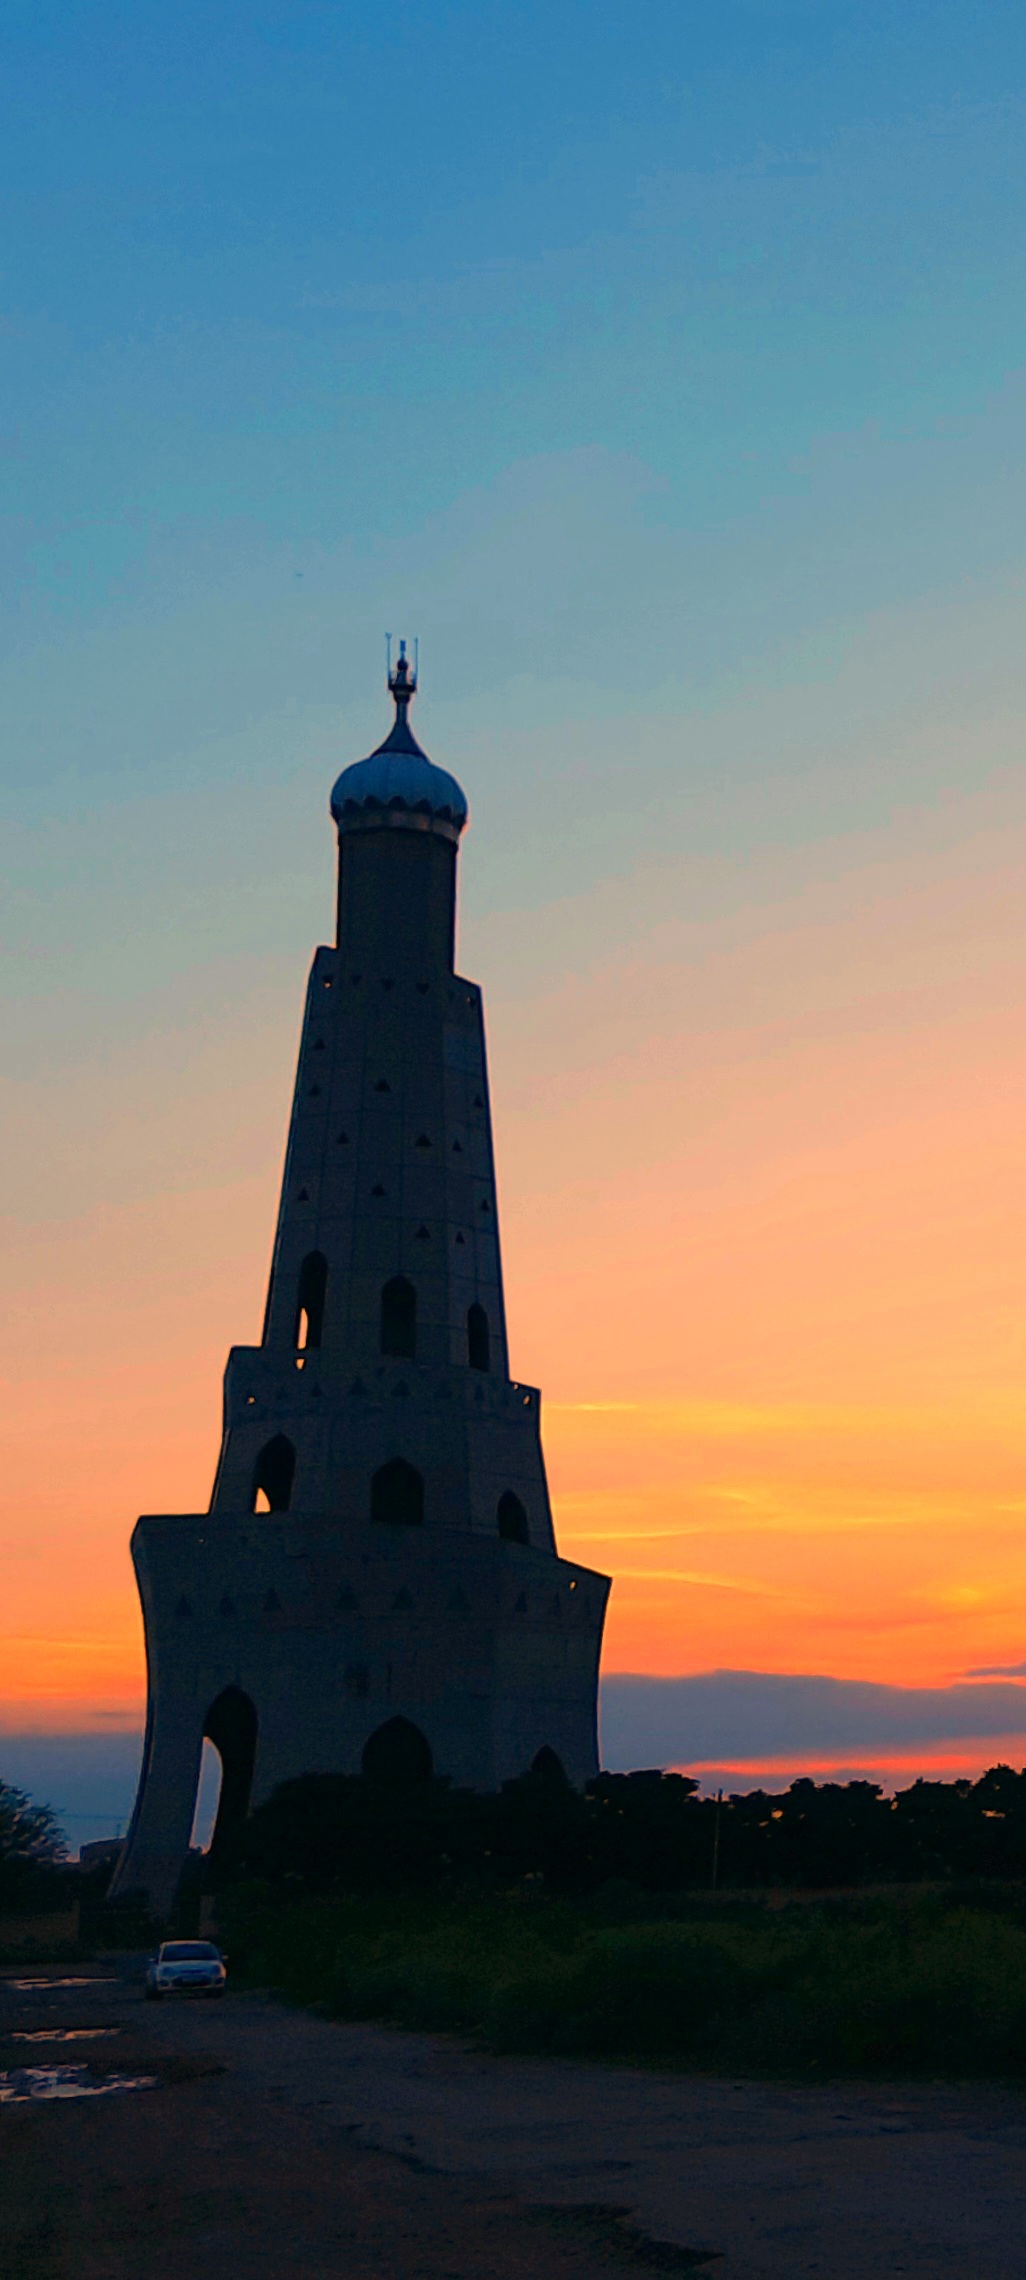 Fateh Burj during sunset